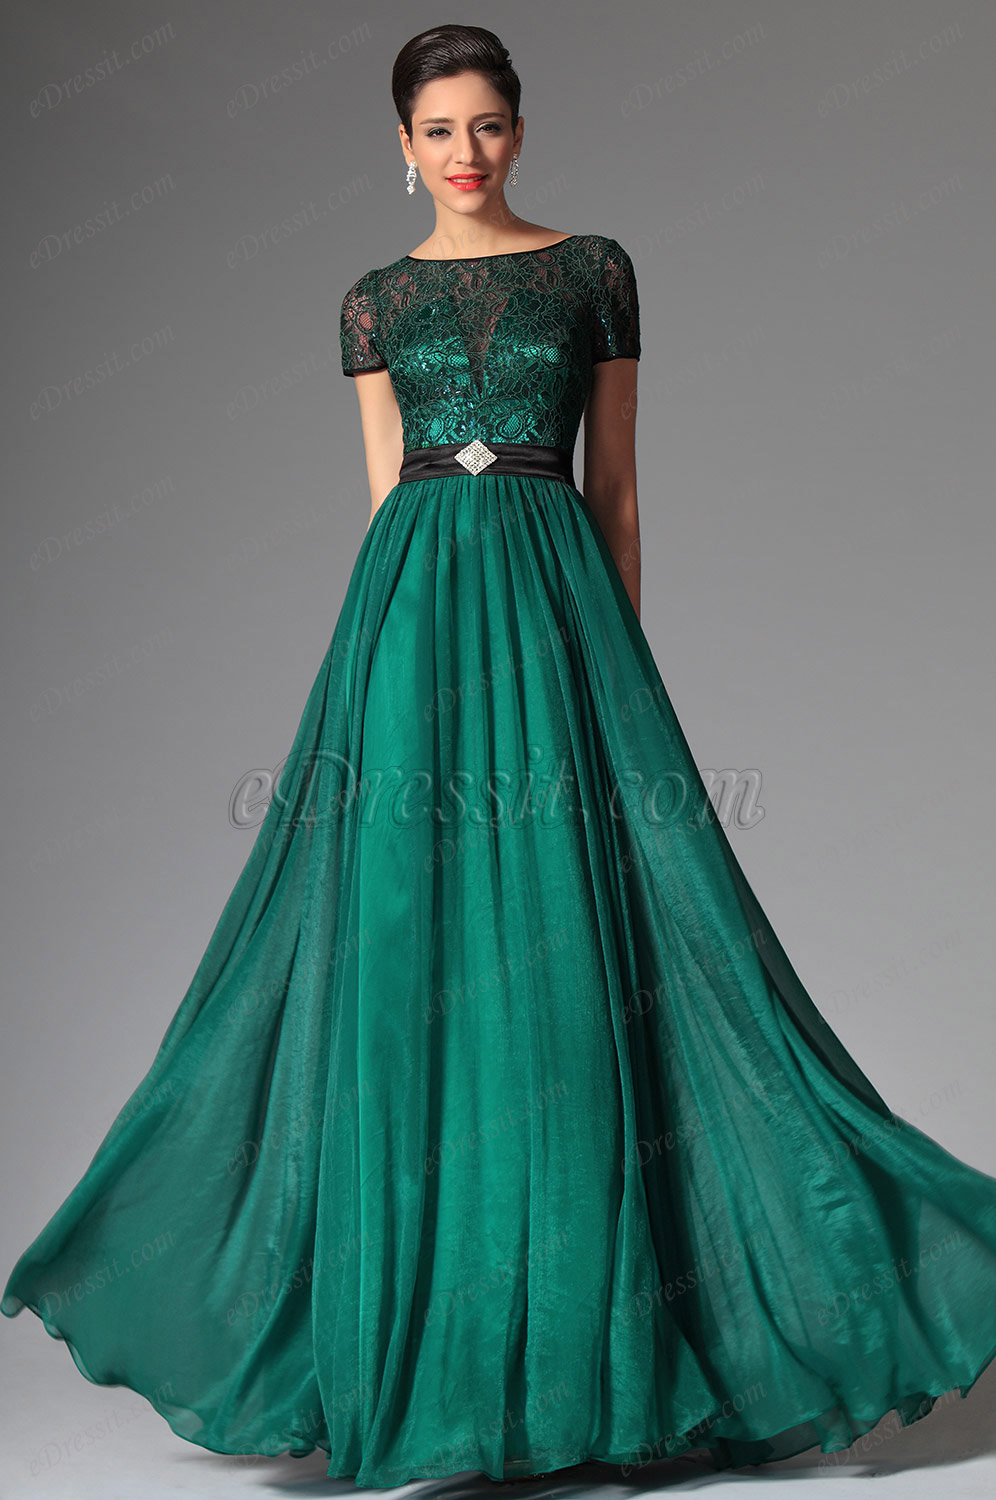 http://www.edressit.com/edressit-dark-green-short-sleeves-evening-dress-prom-dress-02149605-_p3566.html